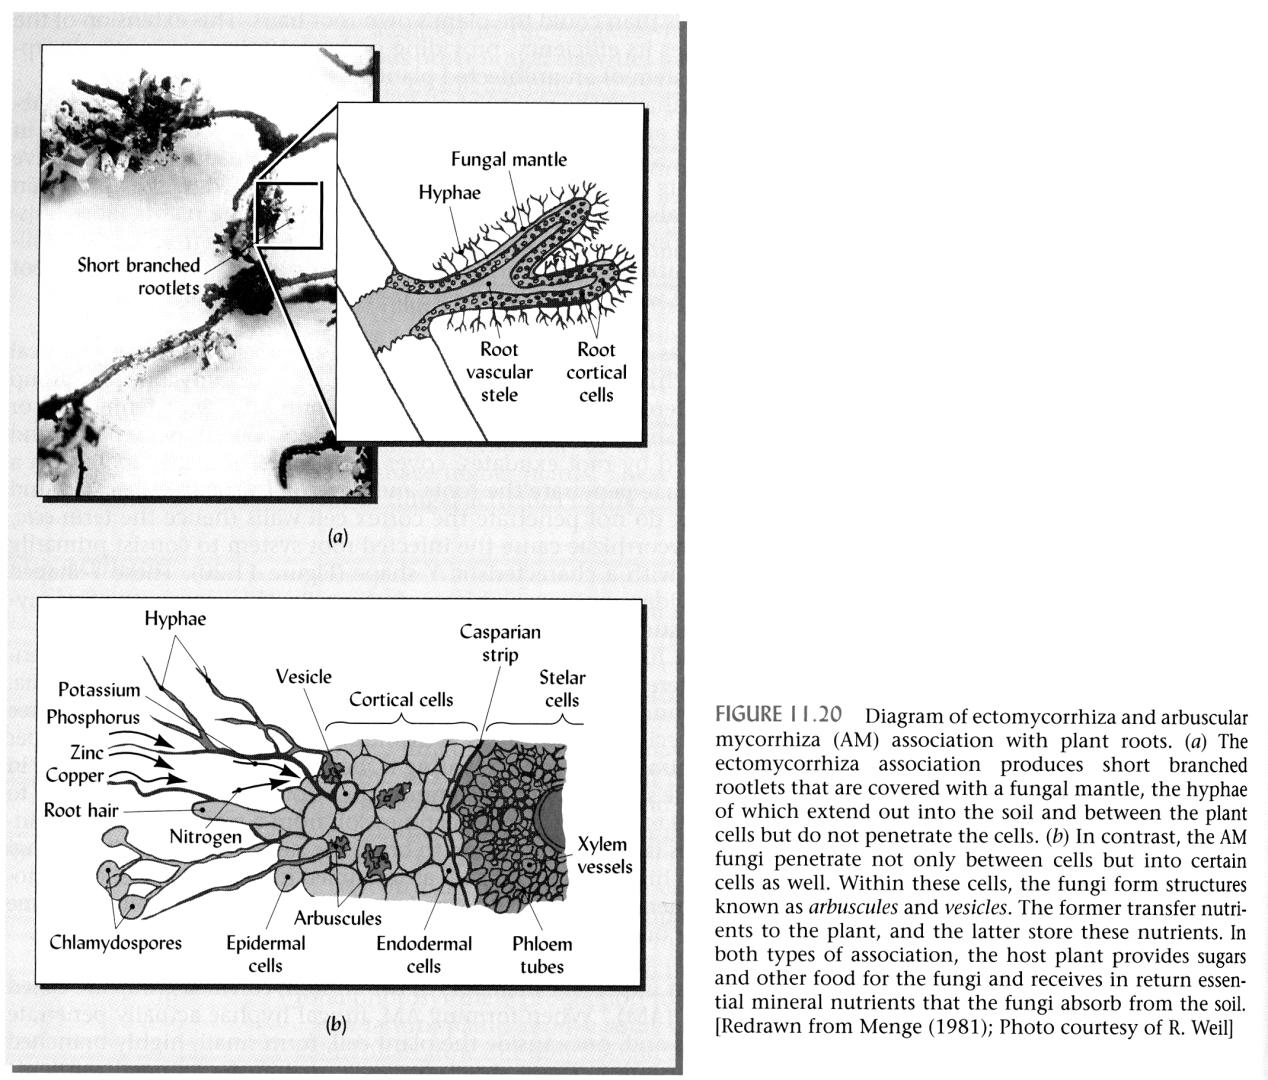 Diagram of ectomycorrhiza and arbuscular mycorrihiza association with plant roots.